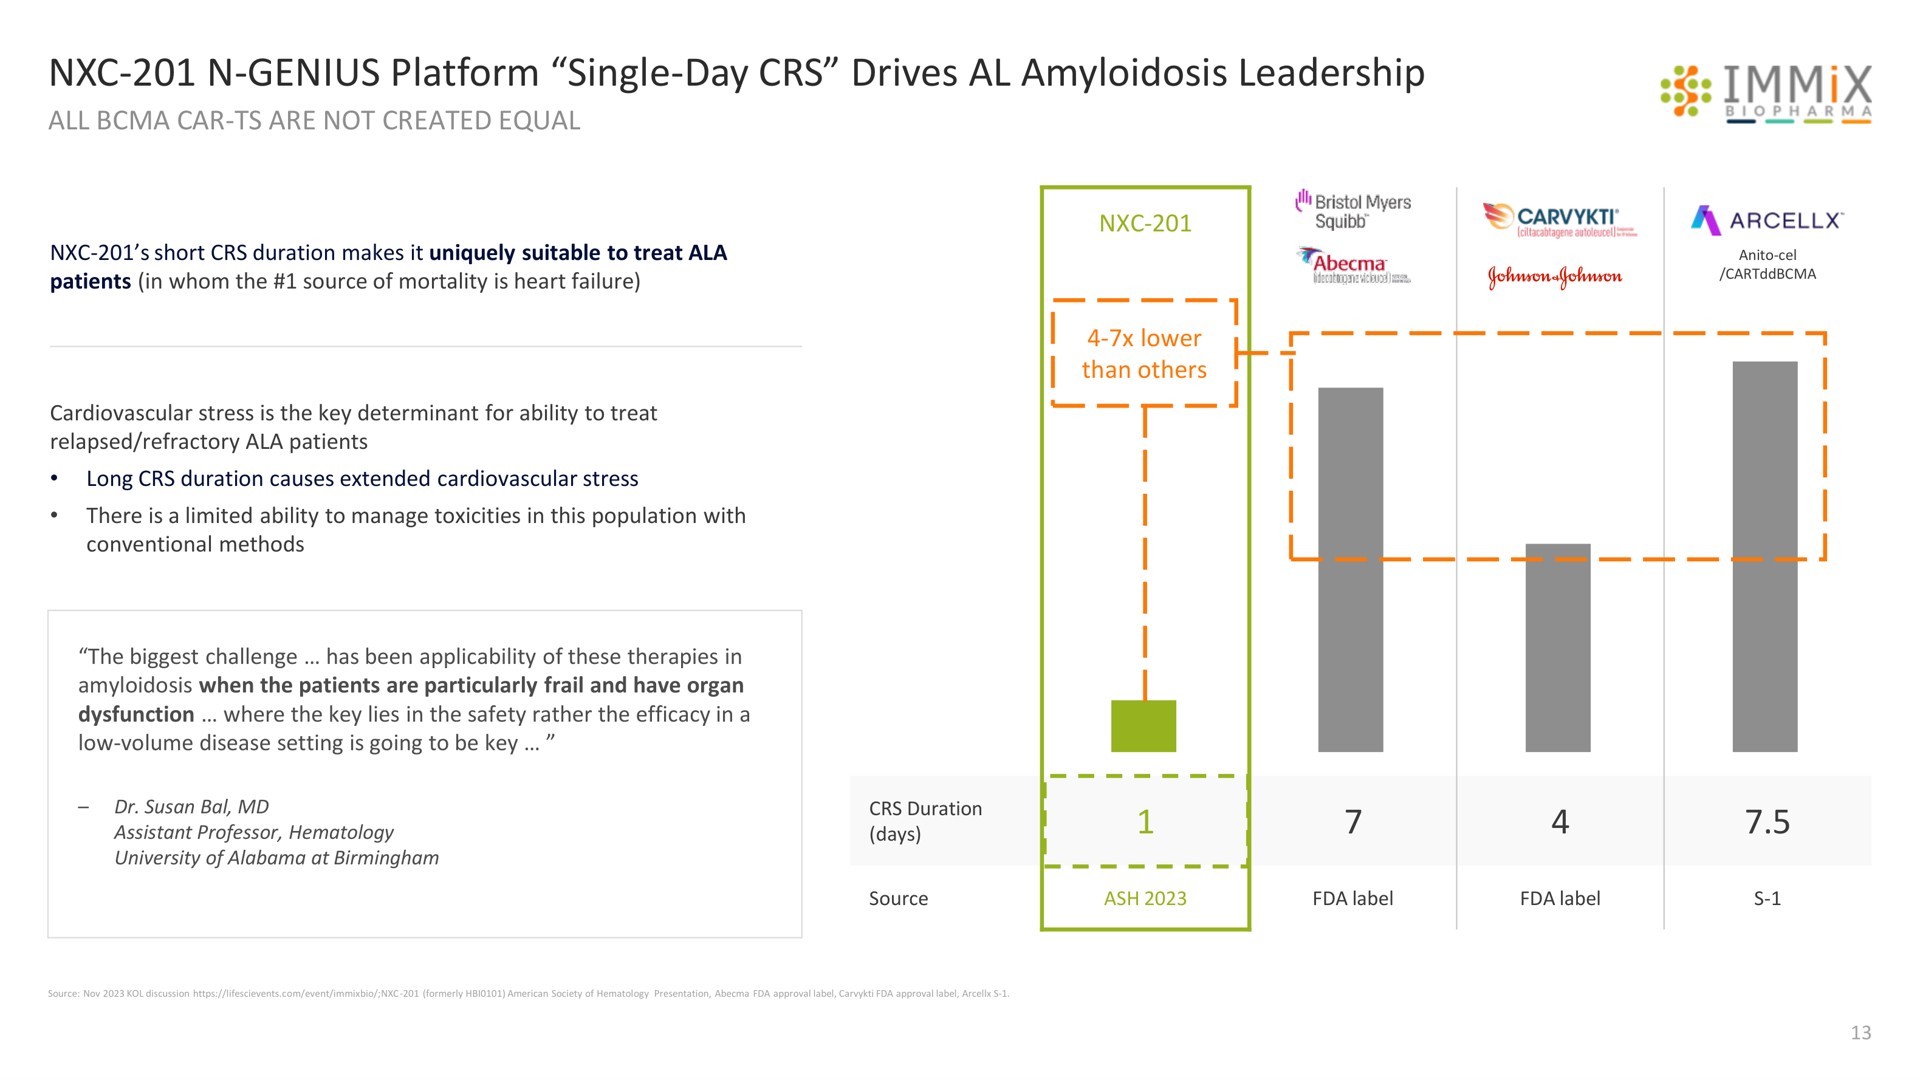 genius platform single day drives amyloidosis leadership immi a | Immix Biopharma